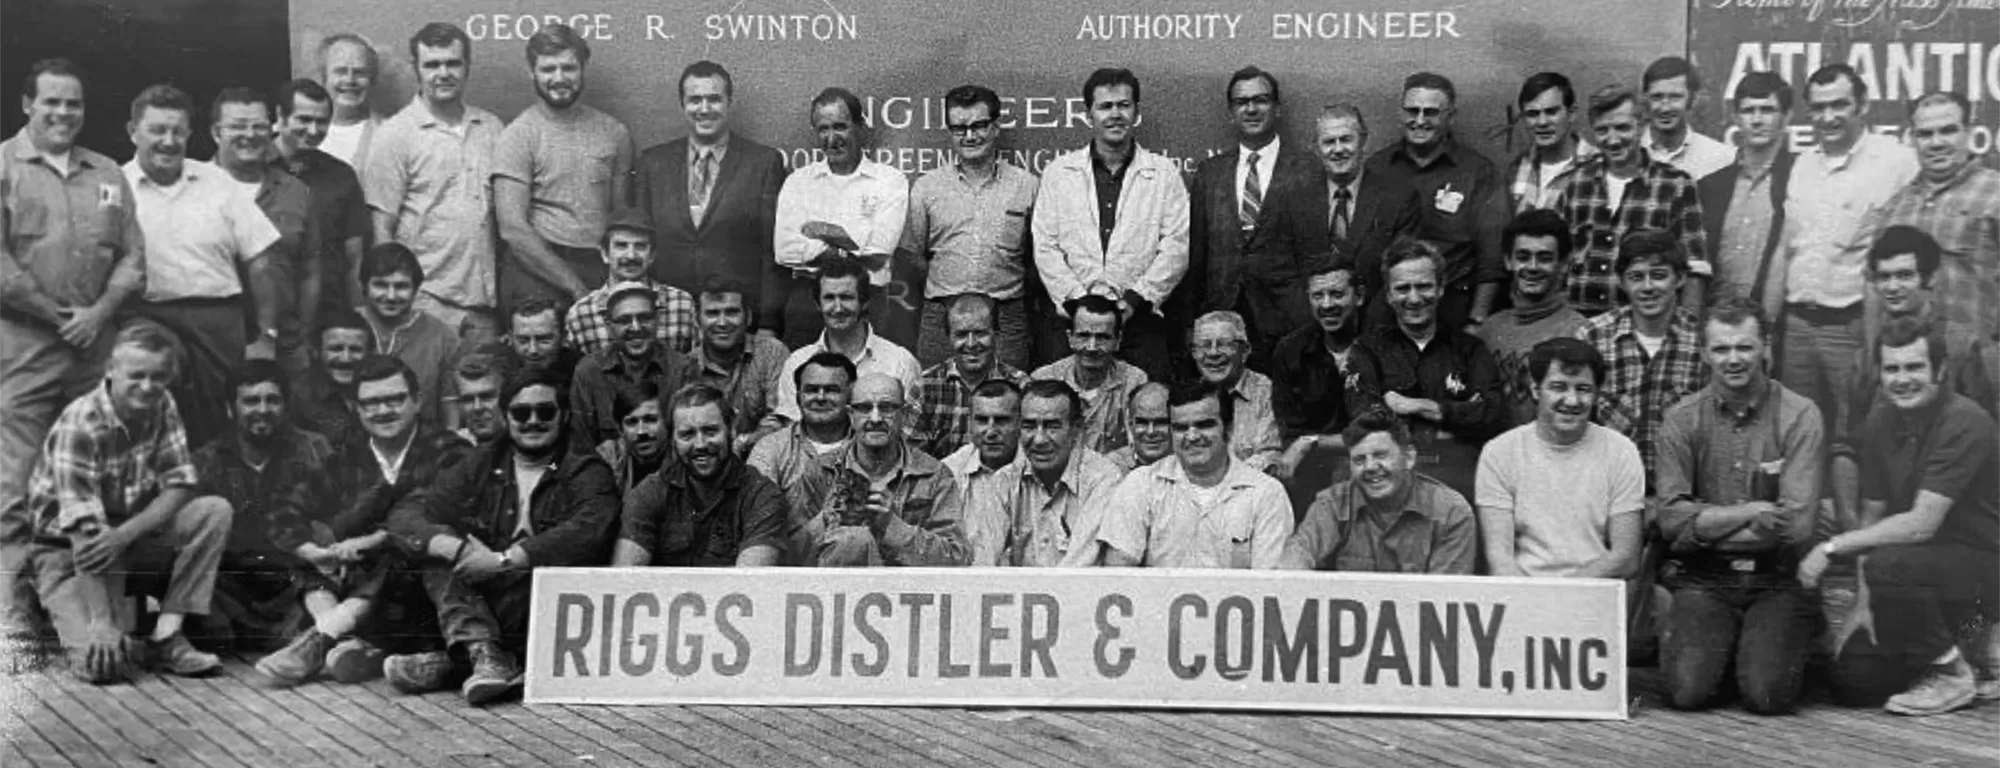 Group photo of Riggs Distler Company